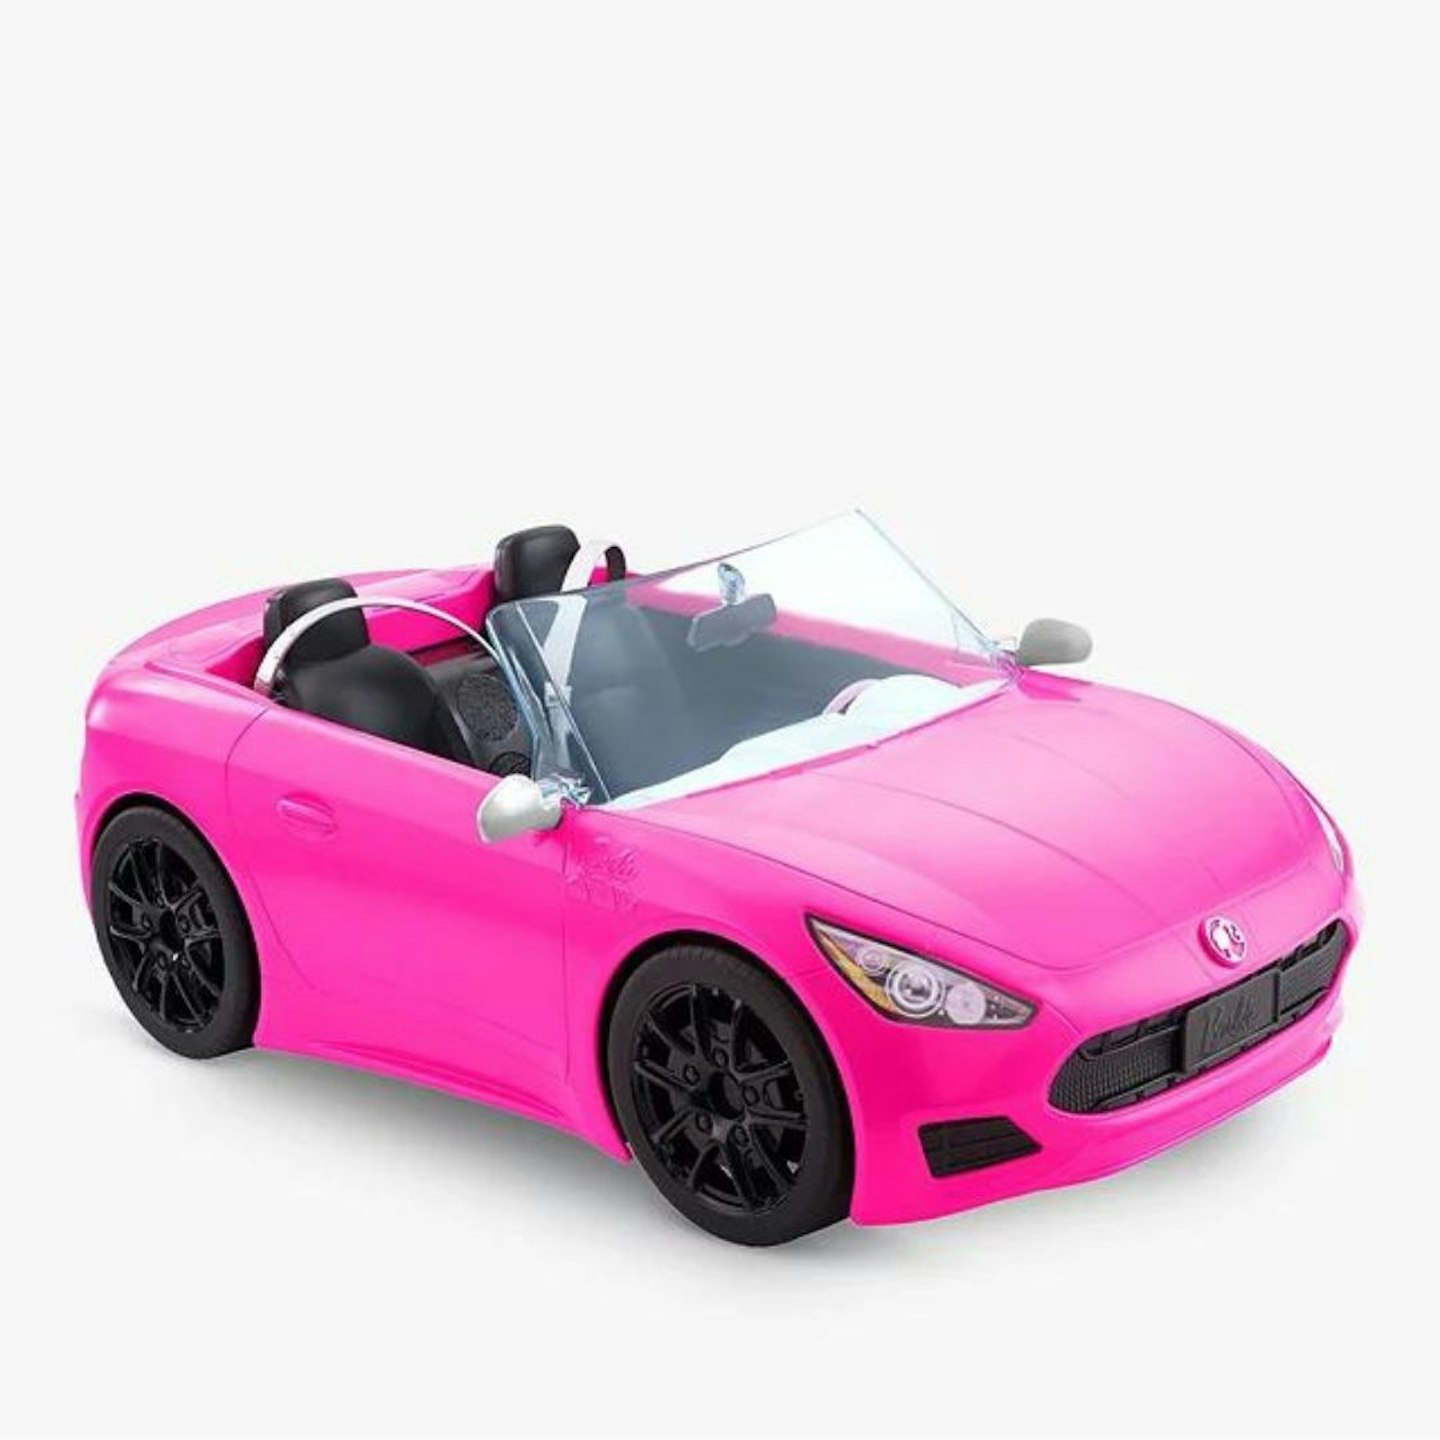 The Top Ten John Lewis Christmas Toys: Barbie Convertible Doll Car